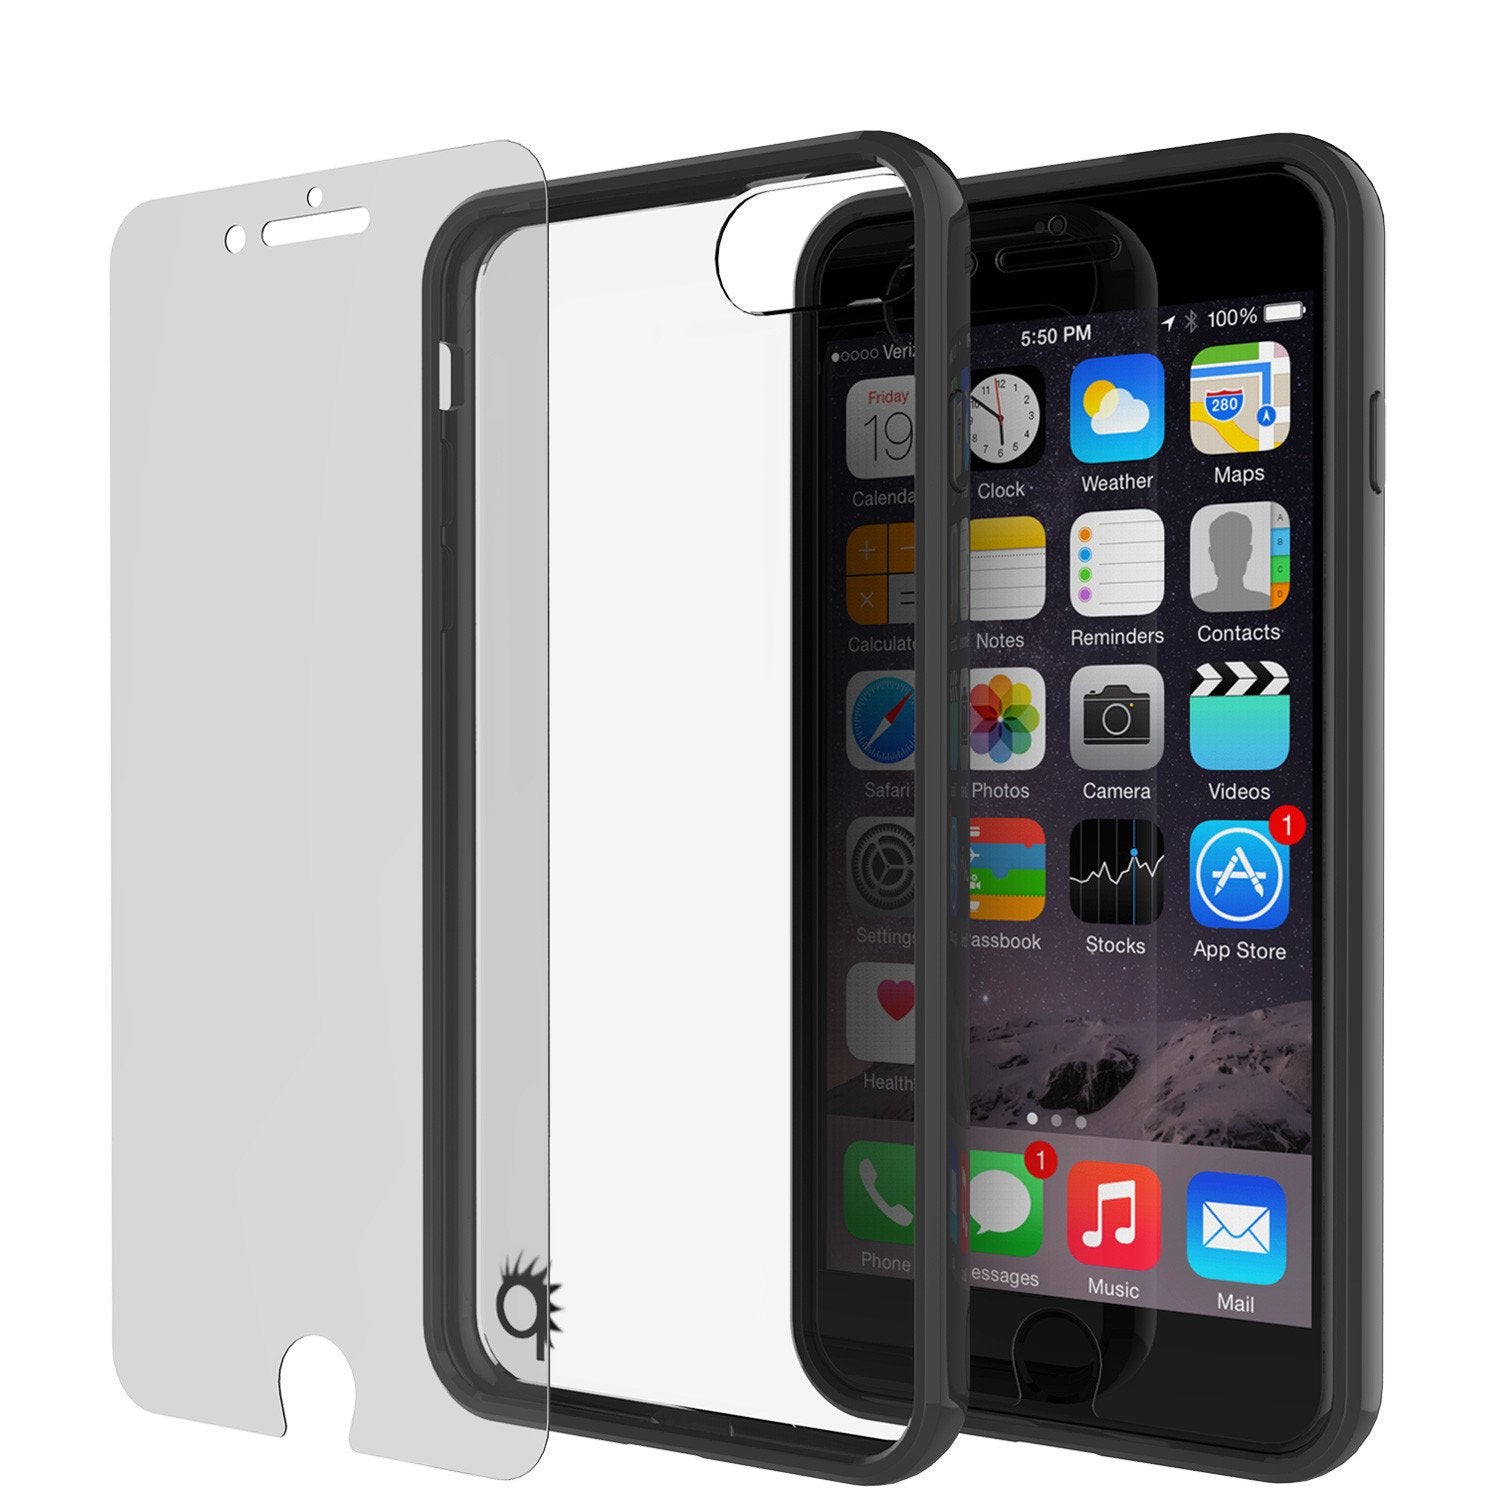 iPhone 7 Case Punkcase® LUCID 2.0 Black Series for Apple iPhone 7 Slim | Slick Frame Lifetime Warranty Exchange